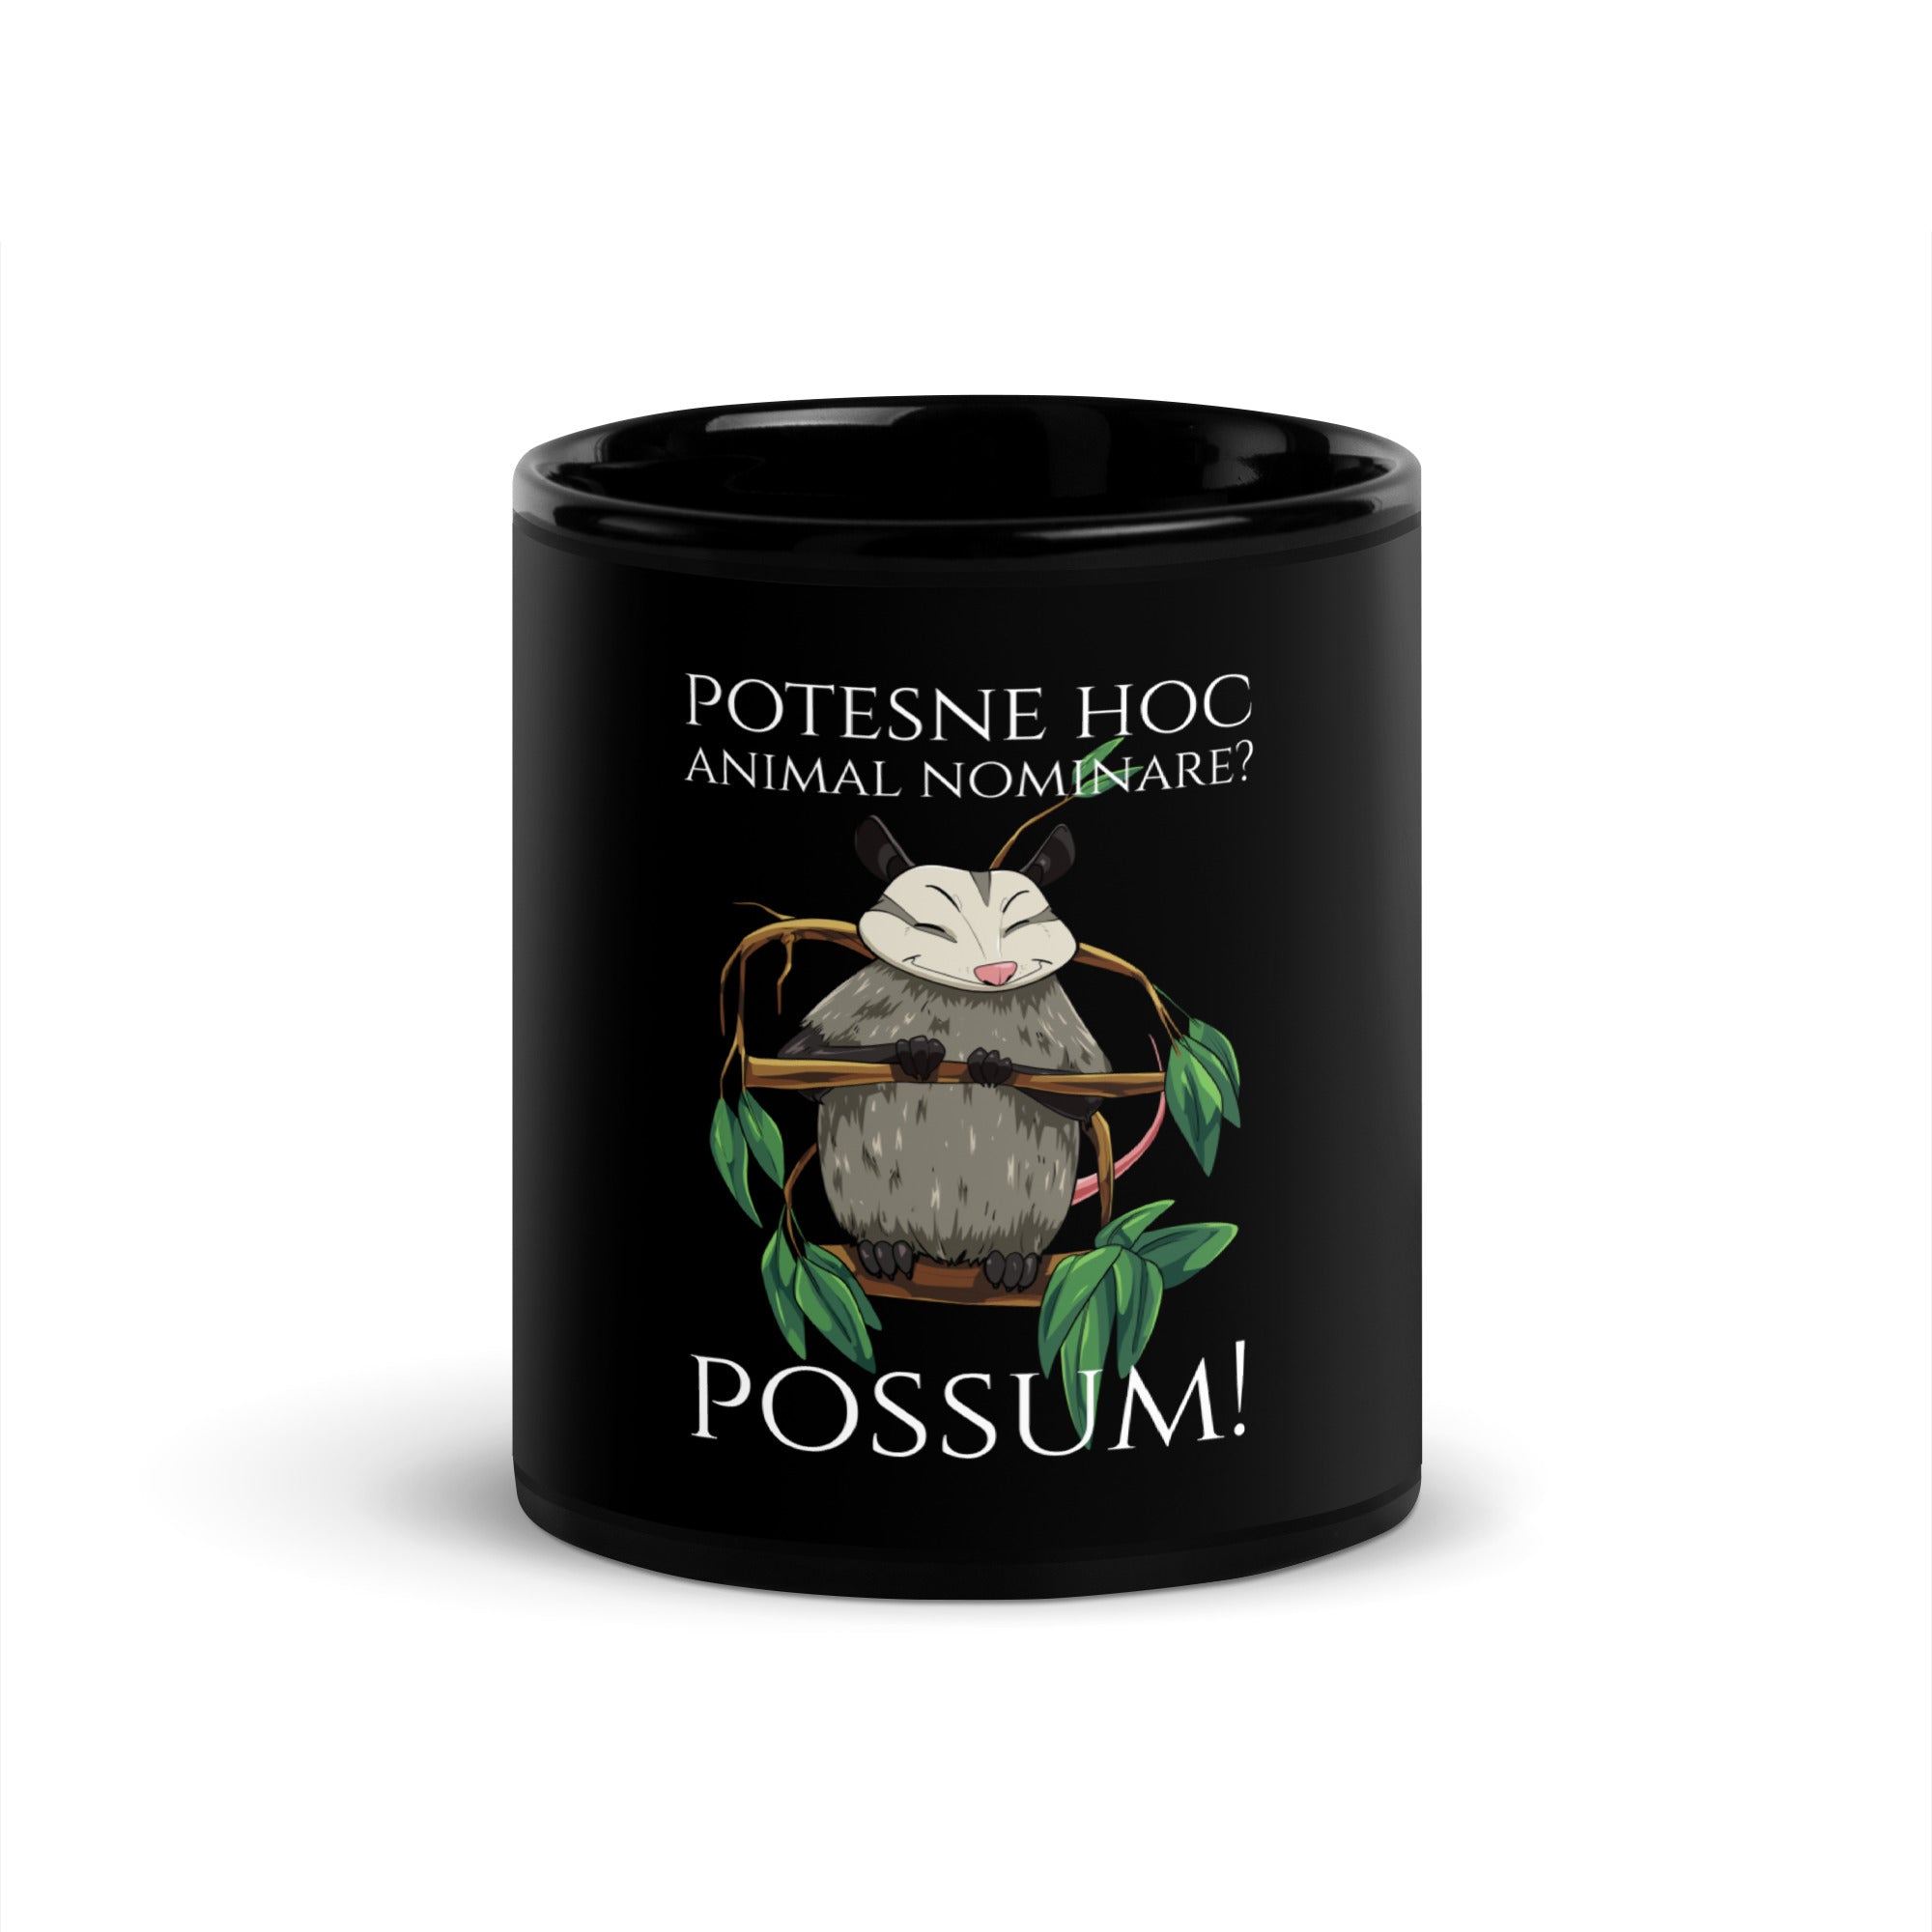 Potesne Hoc Animal Nominare? Possum! - Classical Latin - Black Glossy Mug